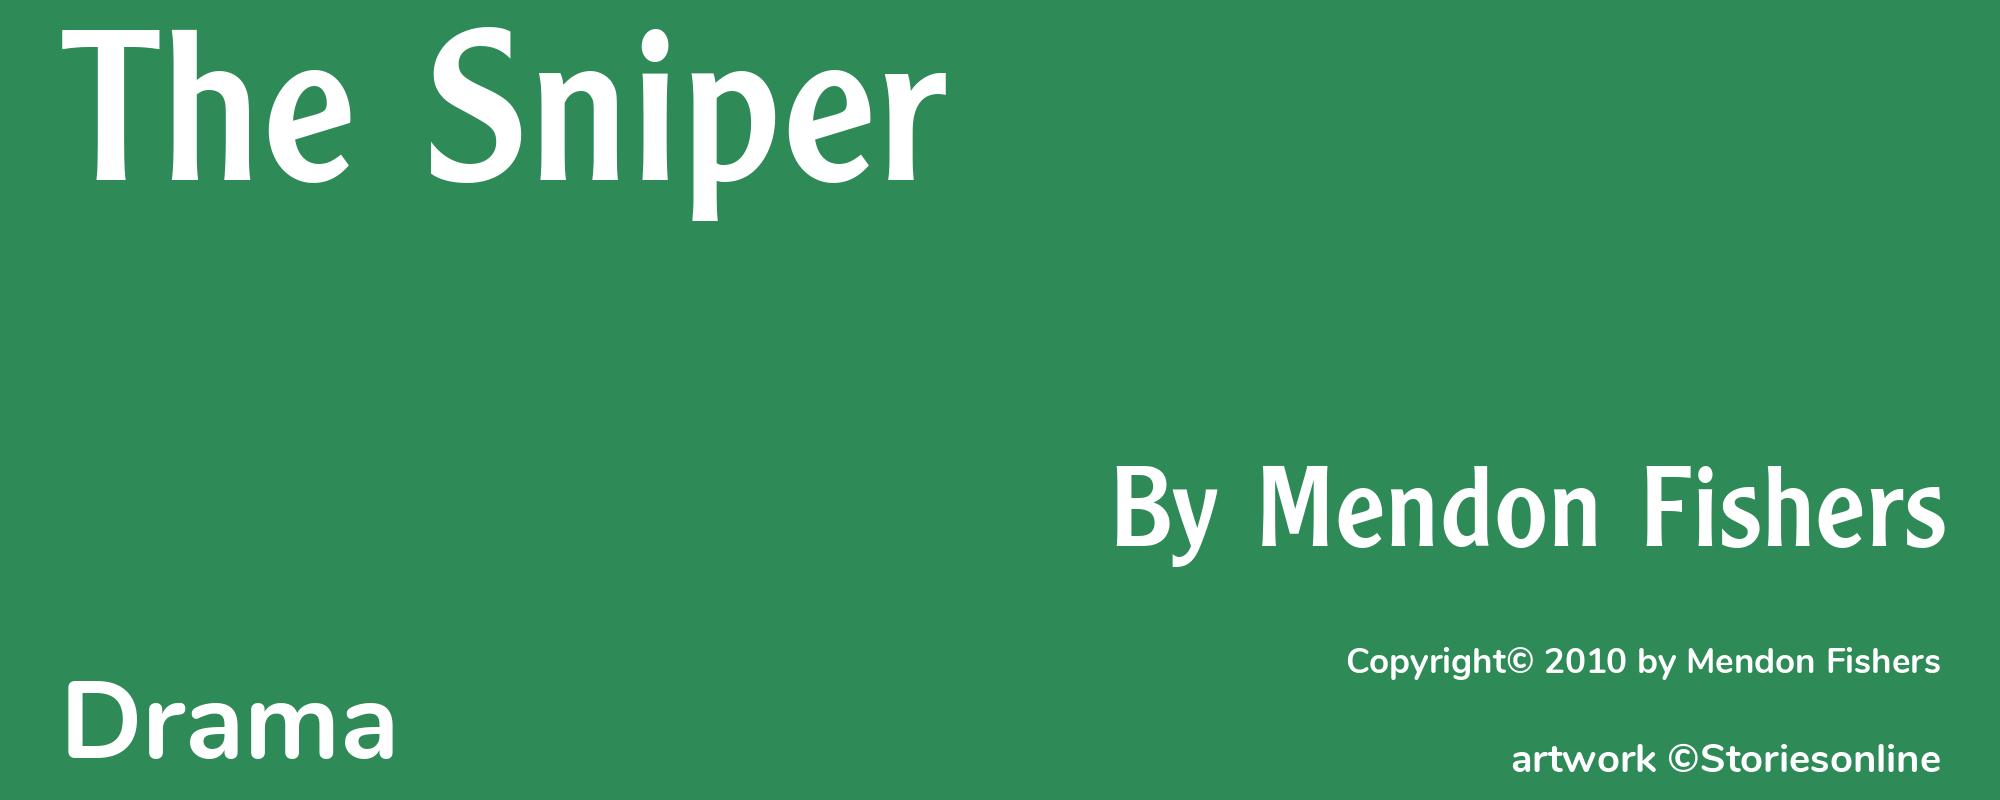 The Sniper - Cover